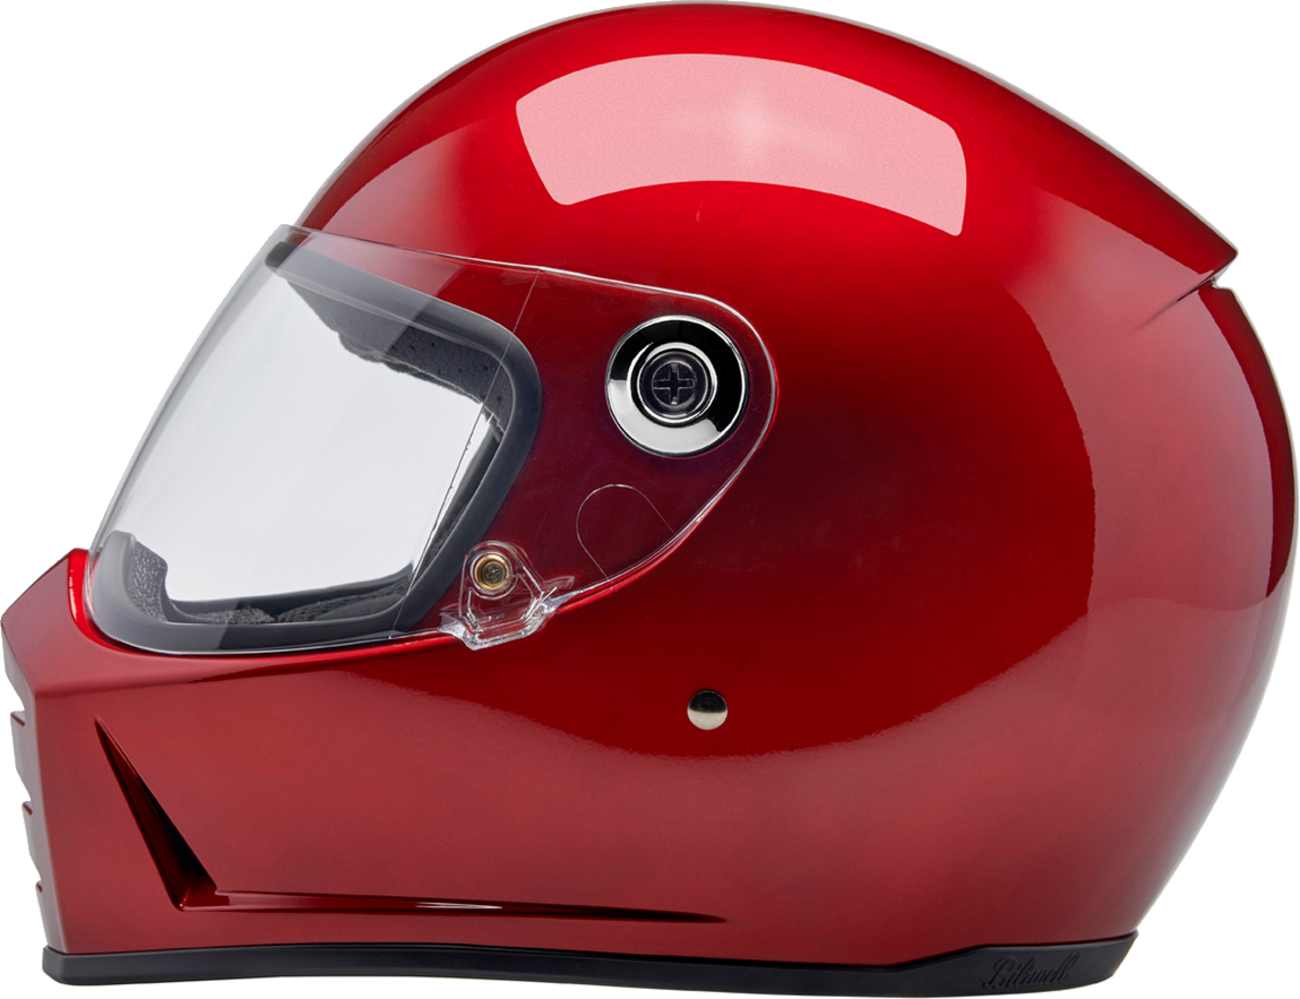 BILTWELL Lane Splitter Helmet - Metallic Cherry Red - Small 1004-351-502